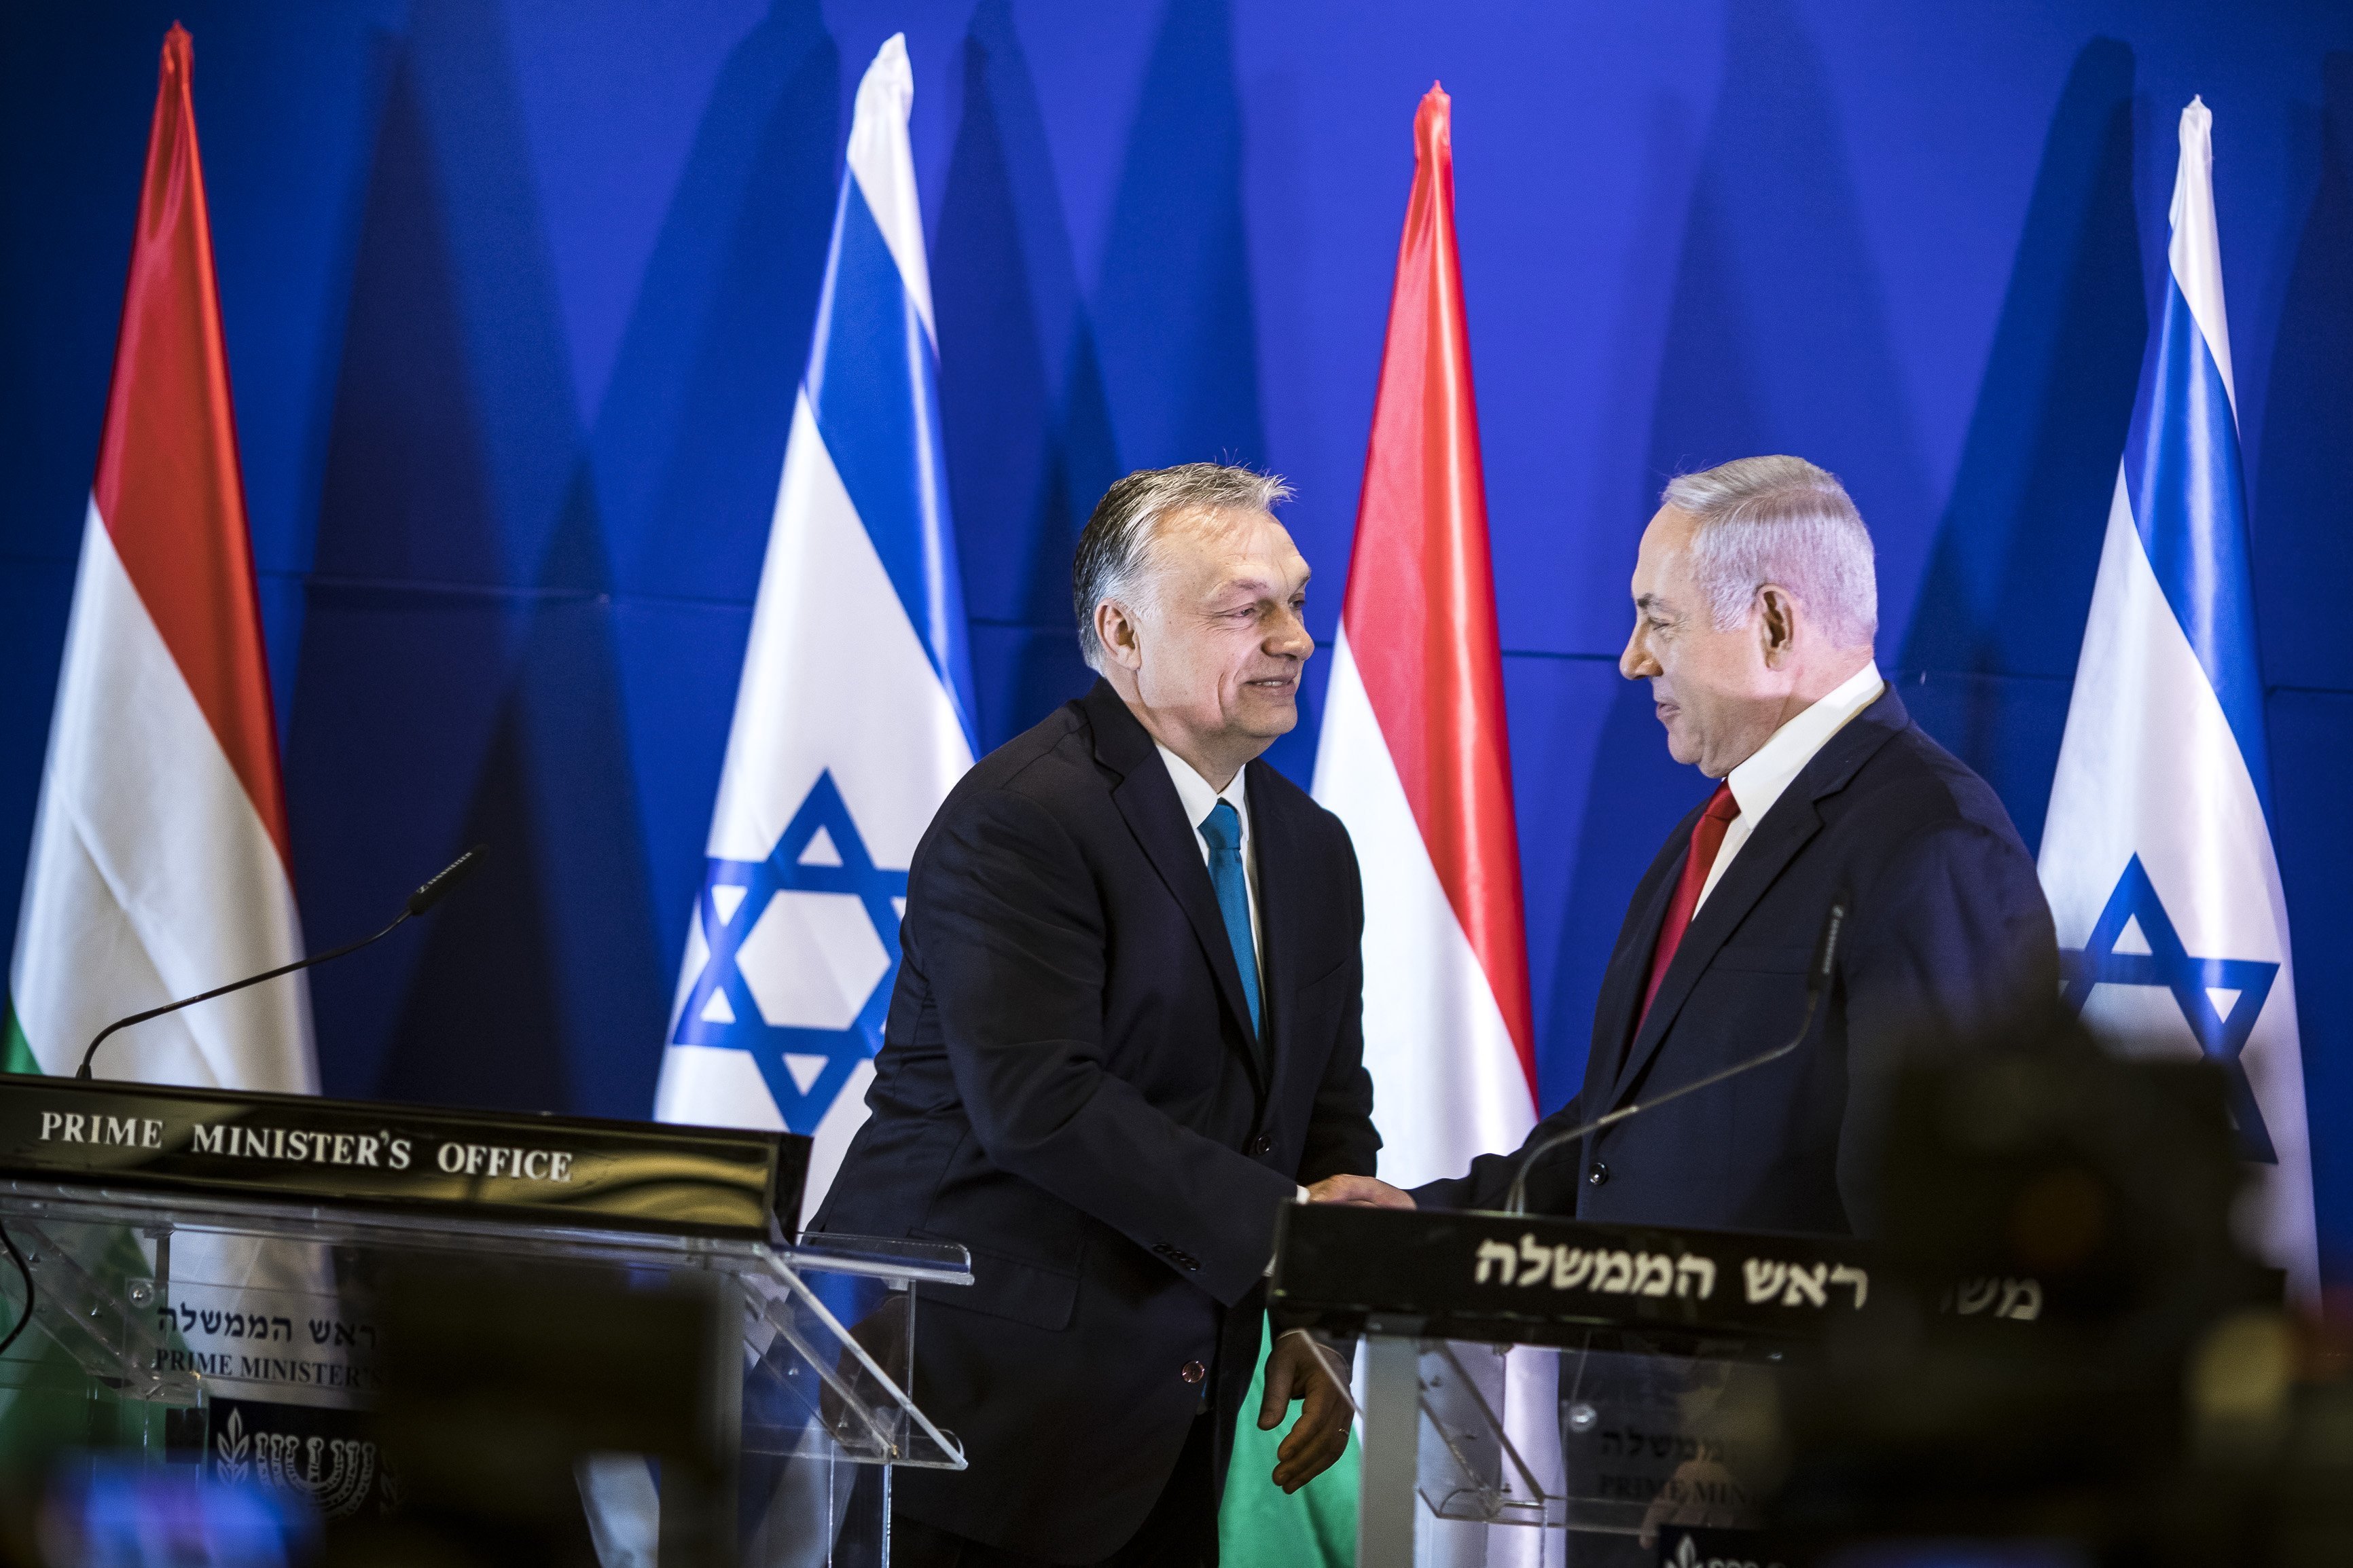 Natenyahu Orbán Israel Hungary